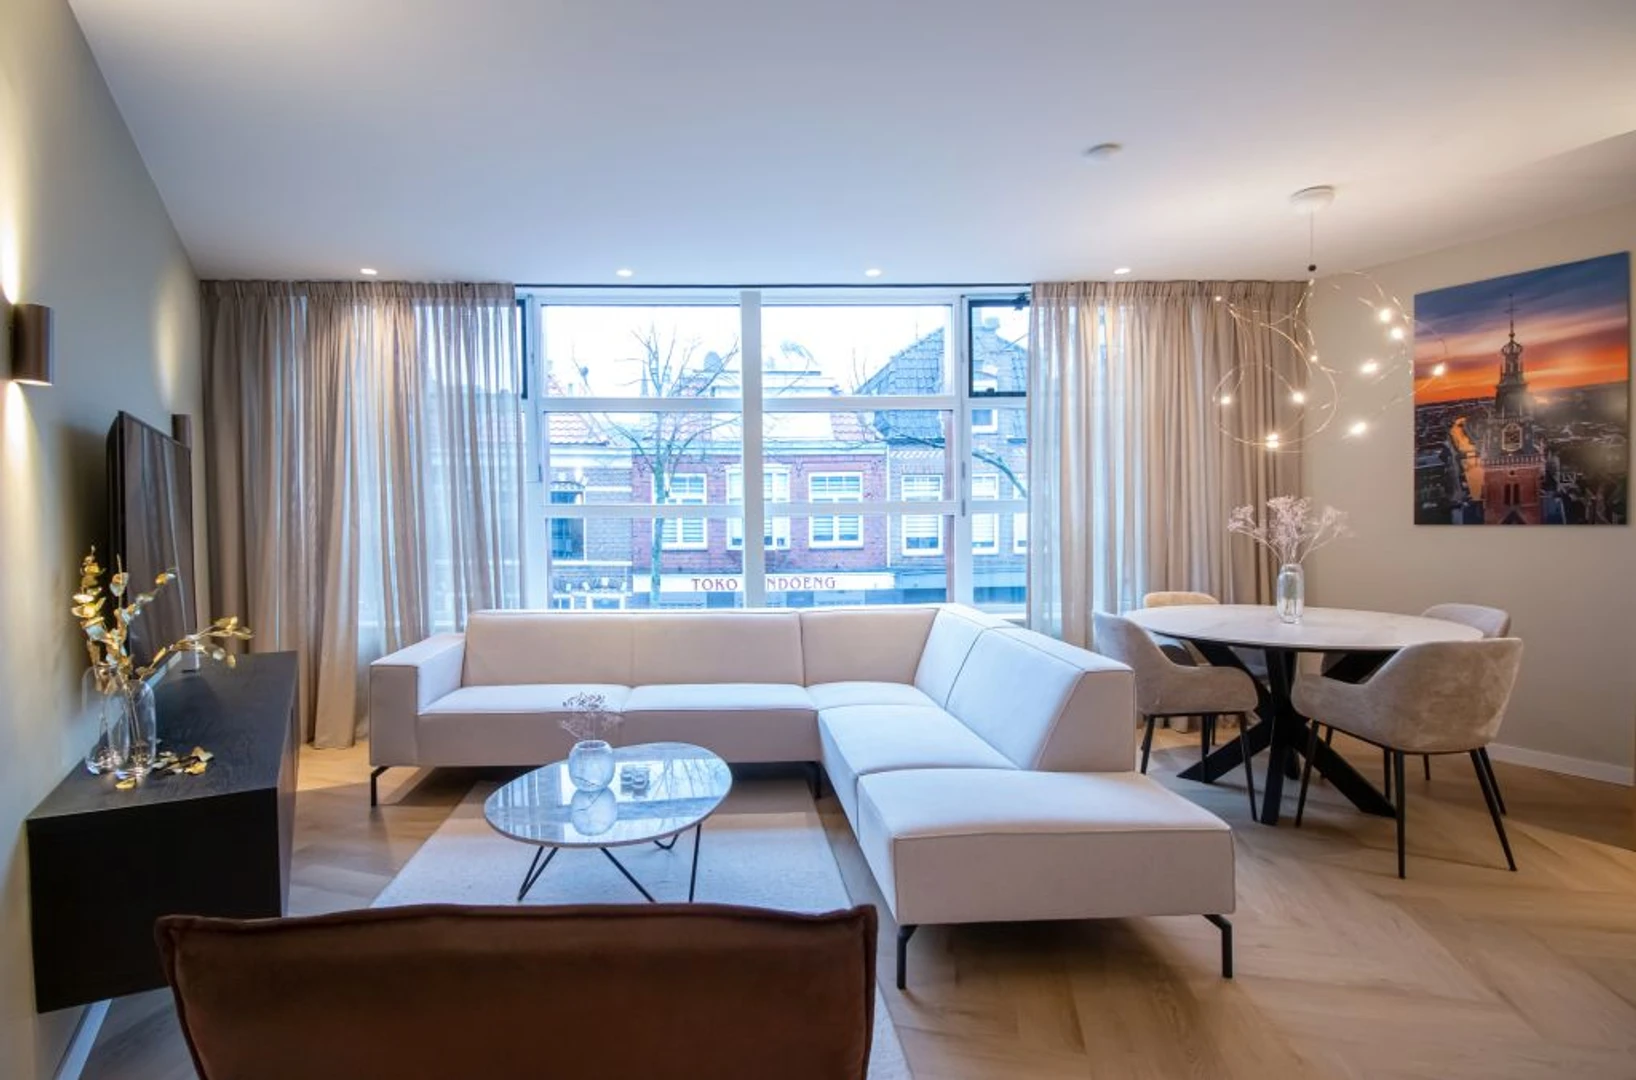 Entire fully furnished flat in Alkmaar